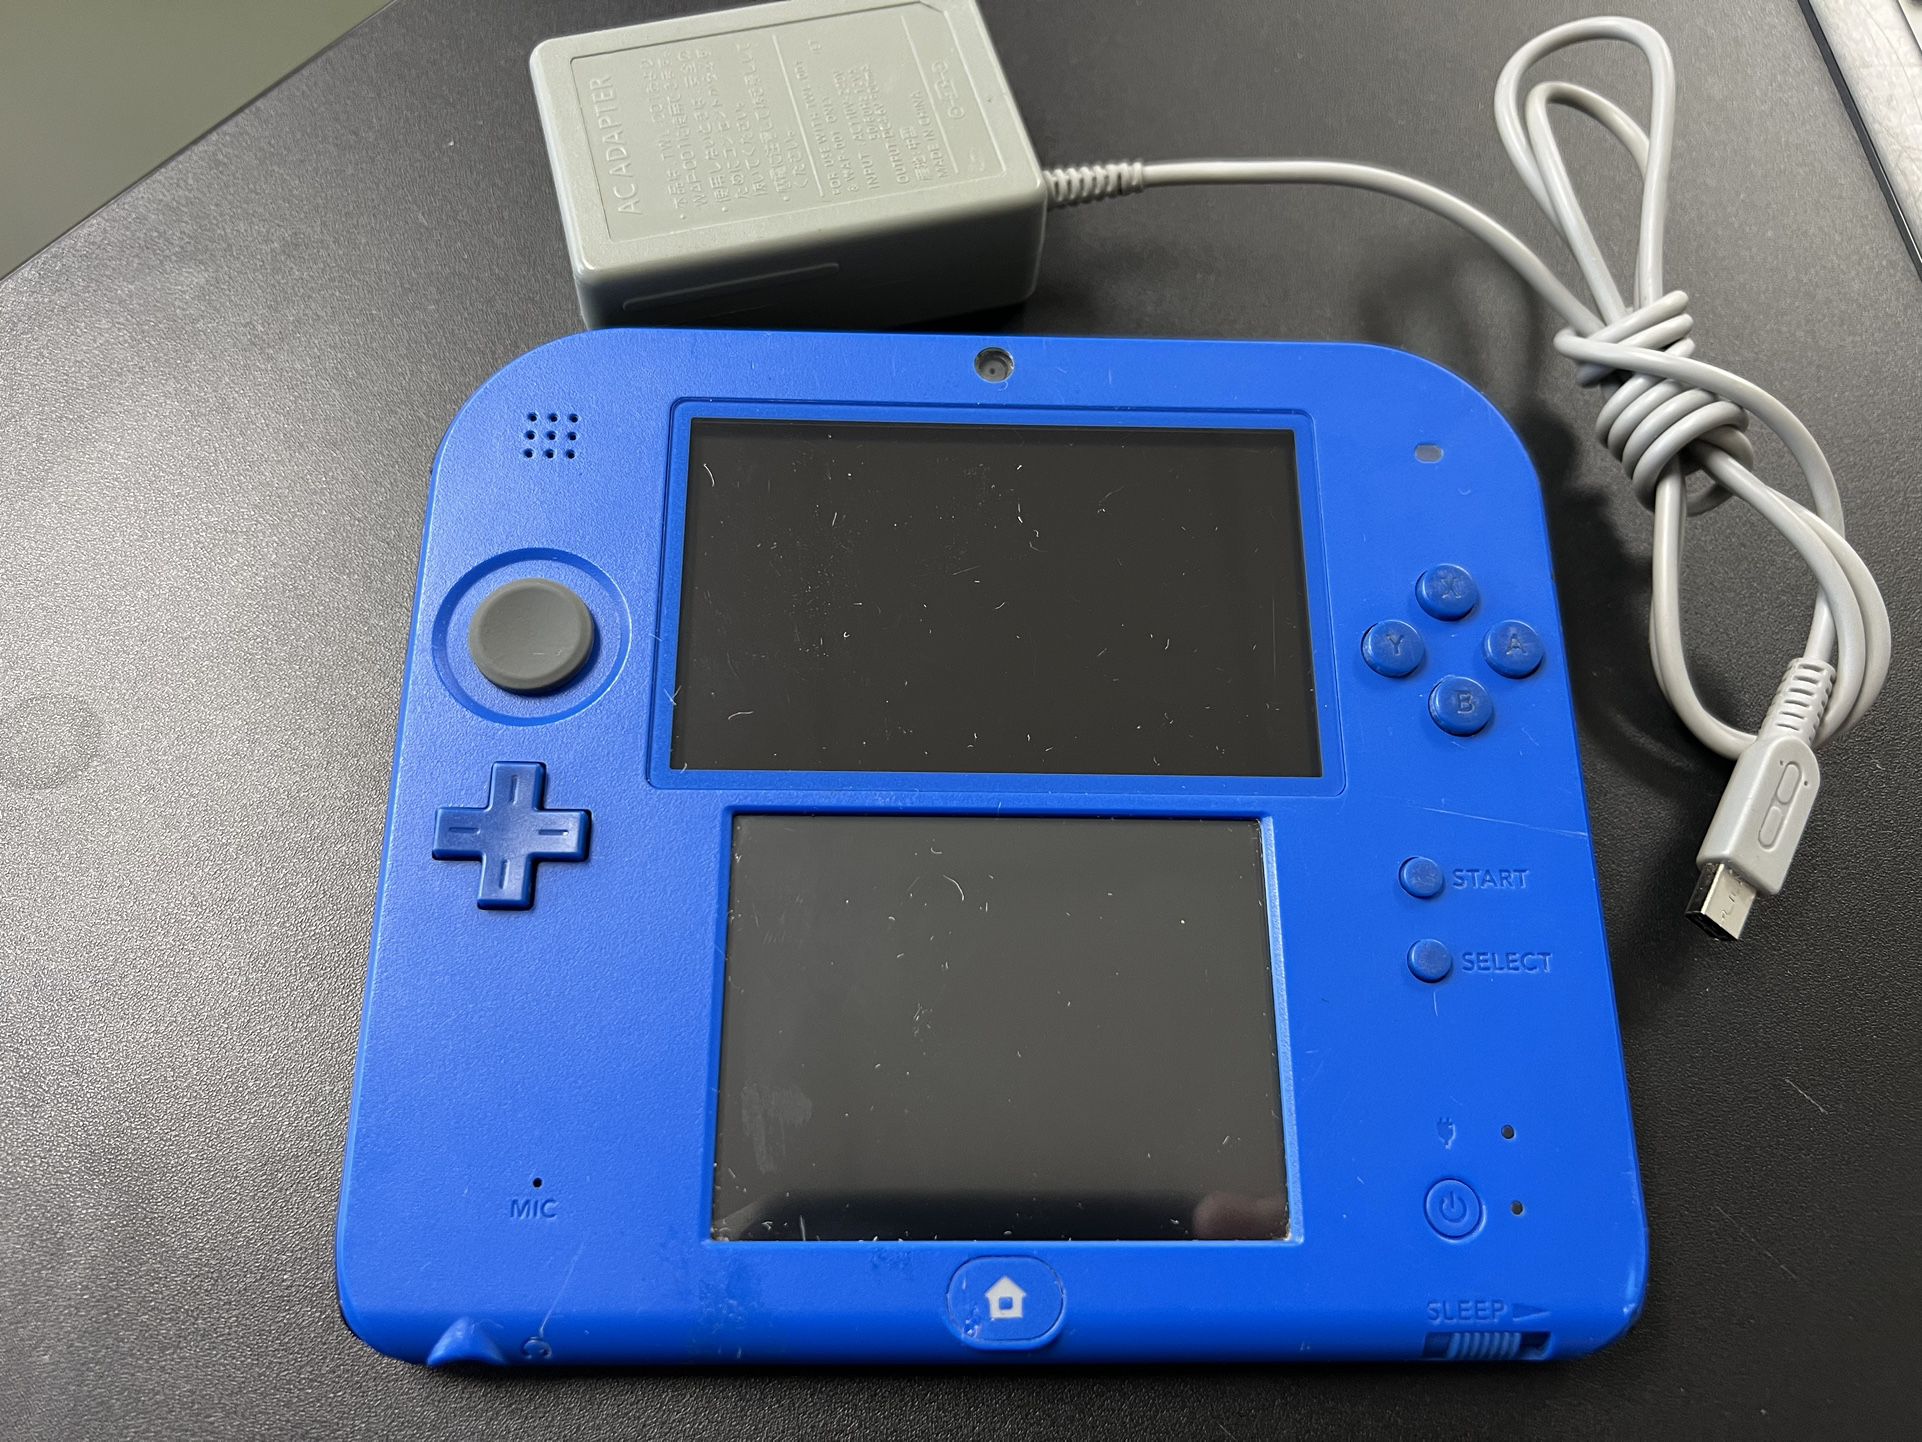 Nintendo 2ds - Blue 